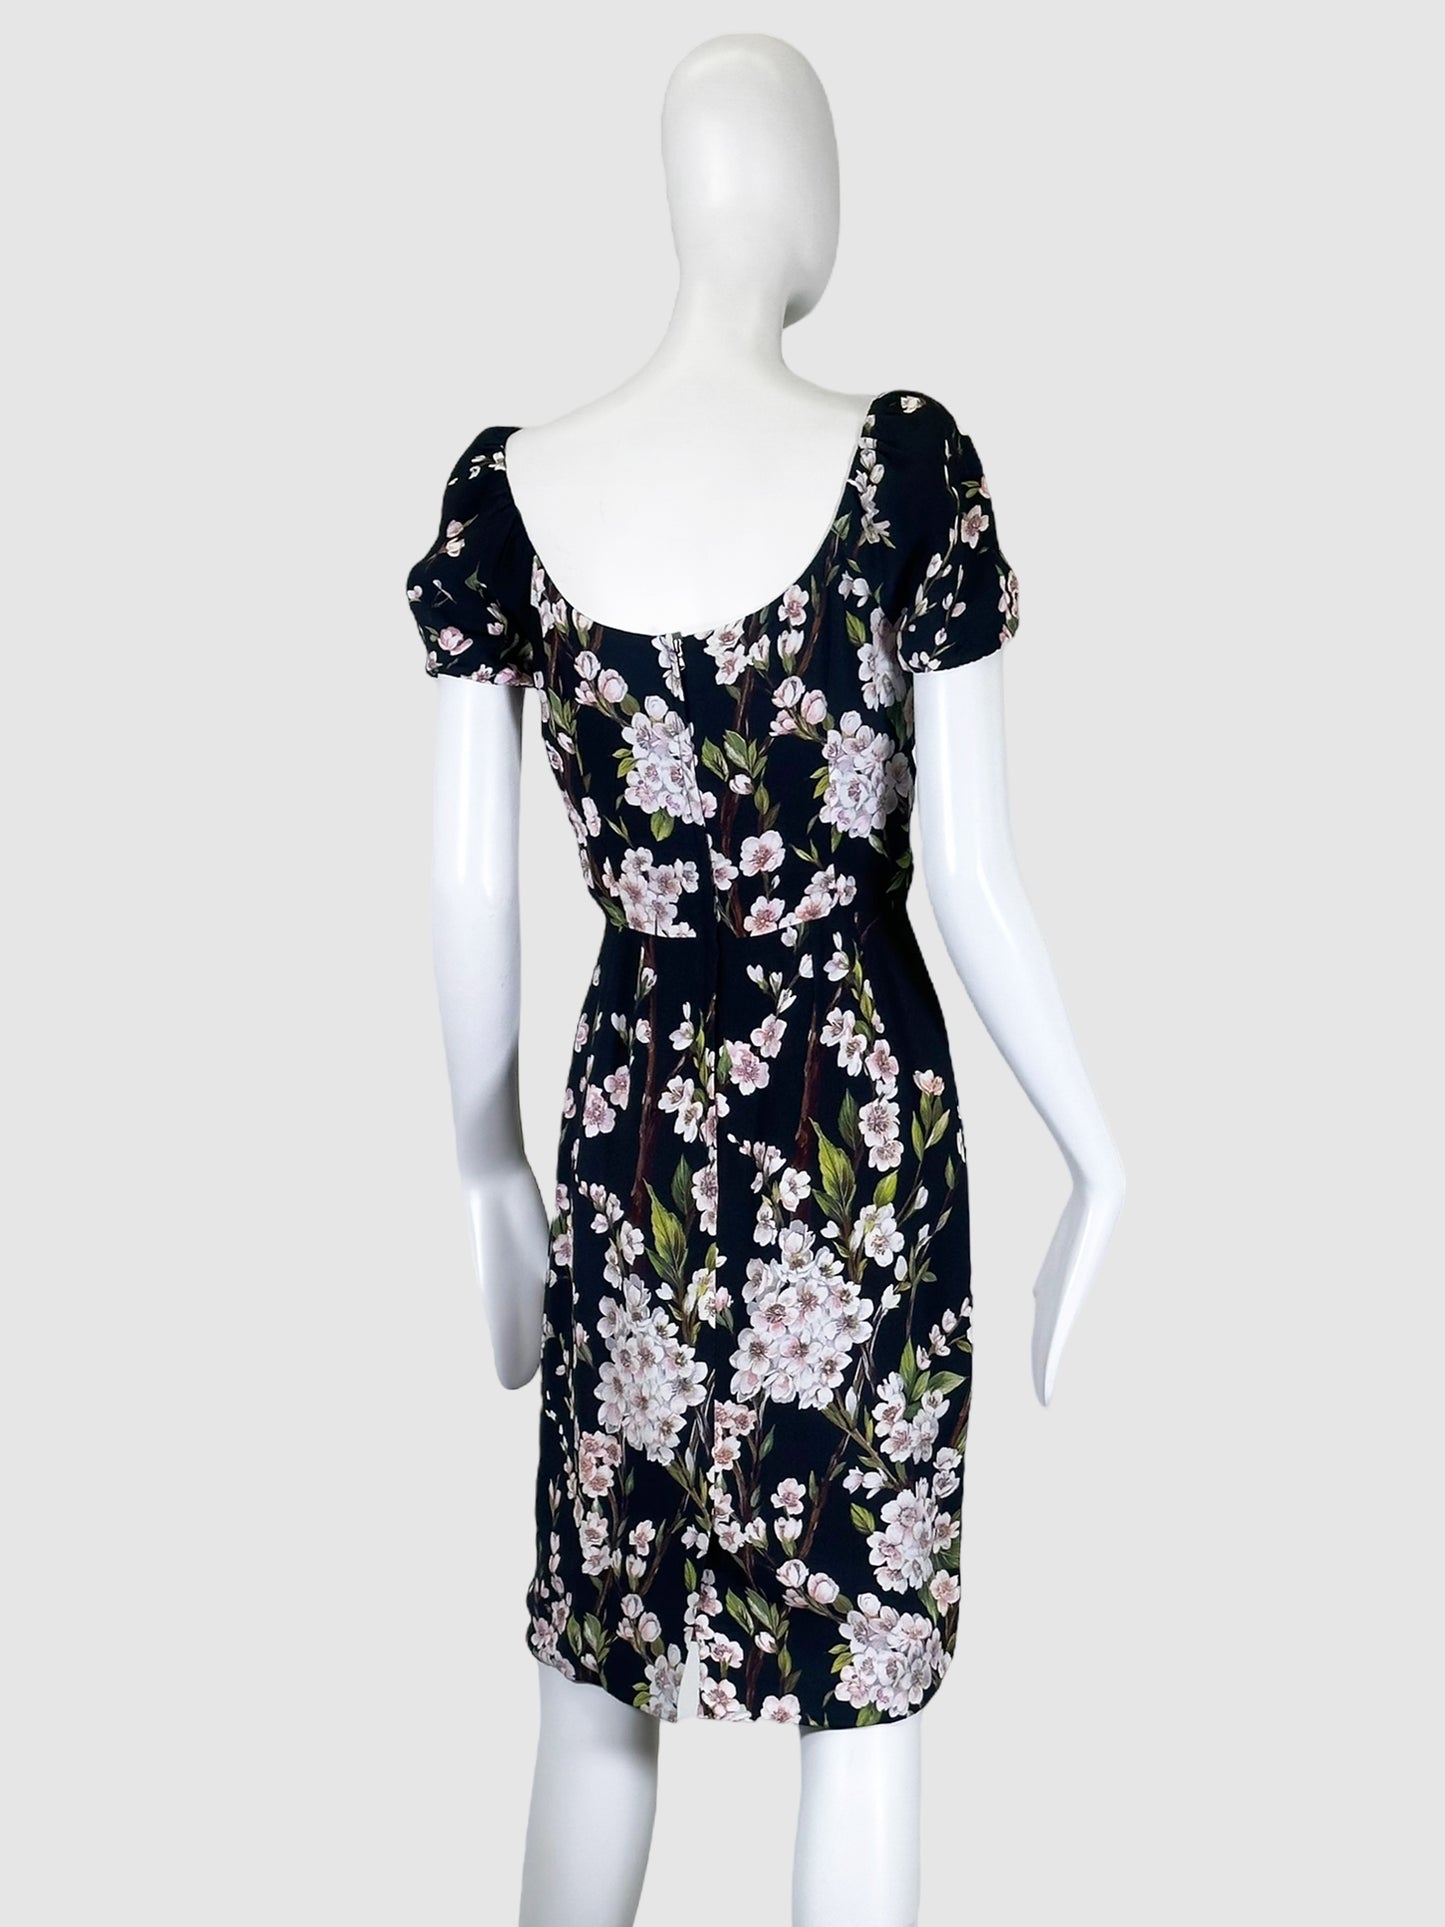 Floral Short Sleeve Dress - Size 38